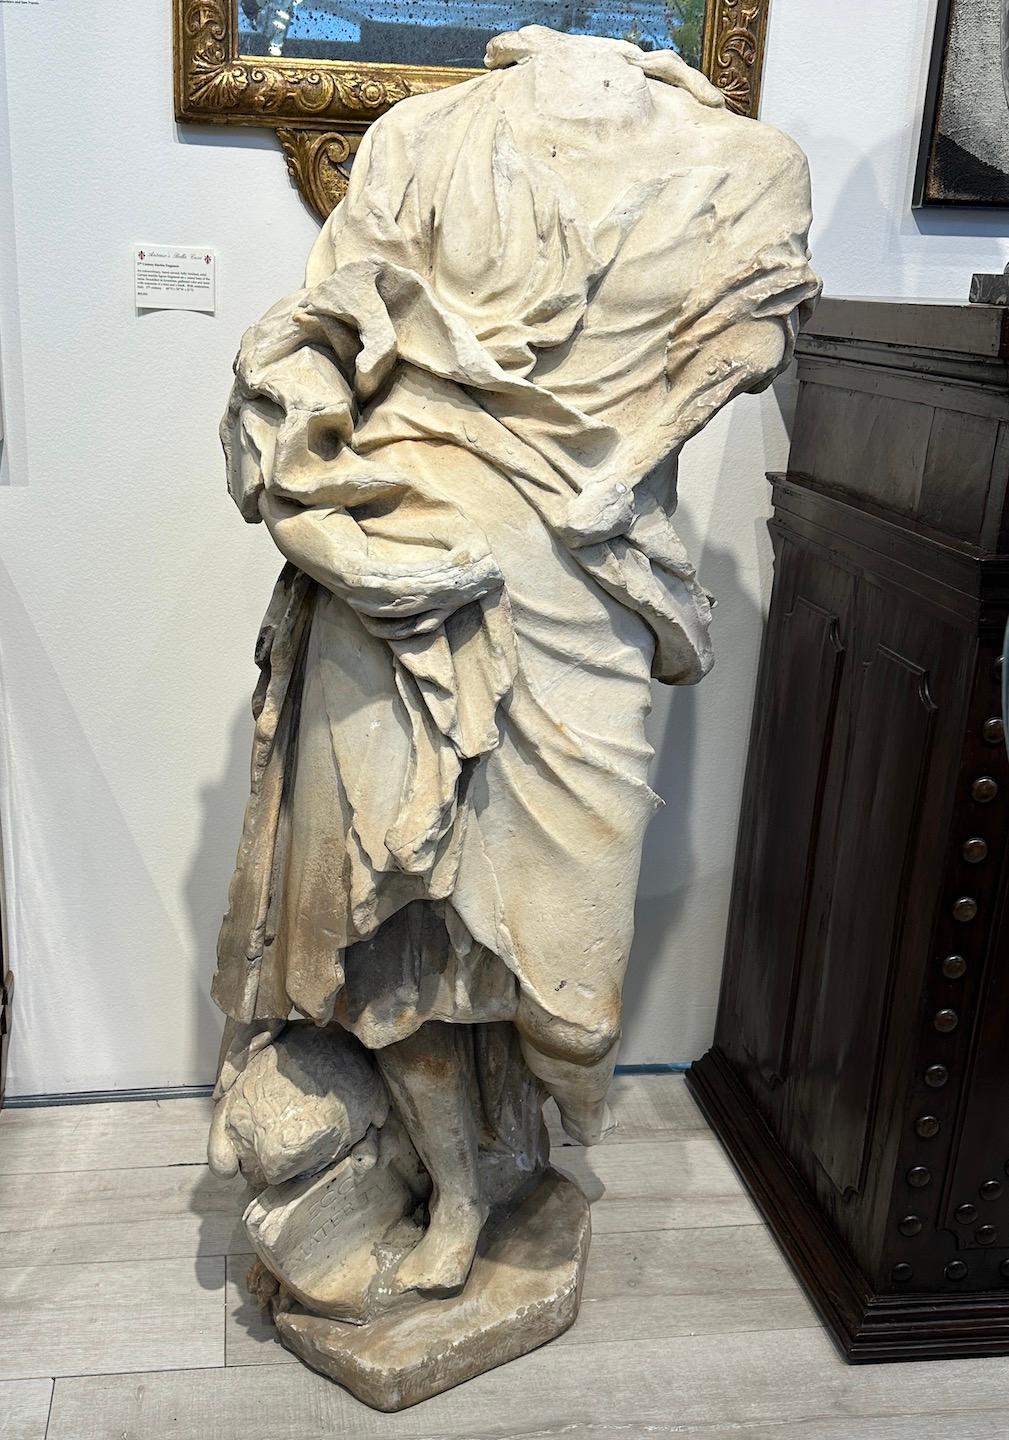 Renaissance Era Marble Figure Fragment - Sculpture by Unknown